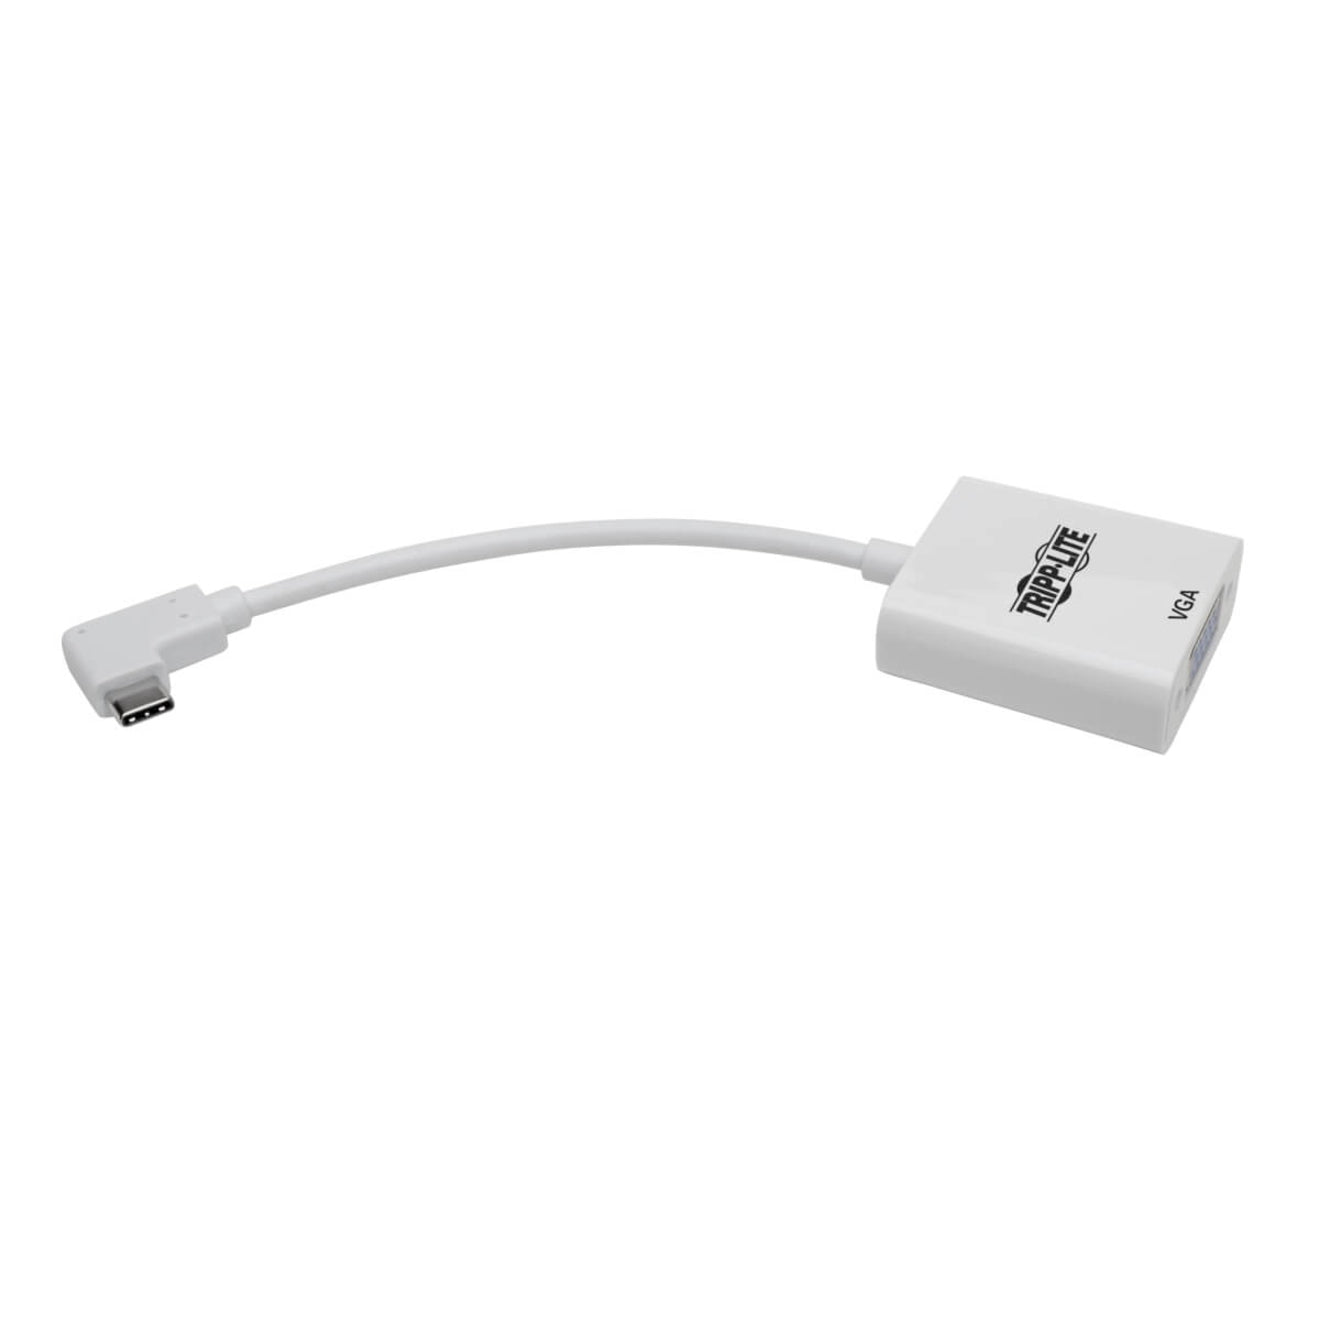 Tripp Lite U444-06N-VGA-RA Right-Angle USB-C to VGA Adapter, M/F, White, 3 Year Warranty, 5 Gbit/s Data Transfer Rate